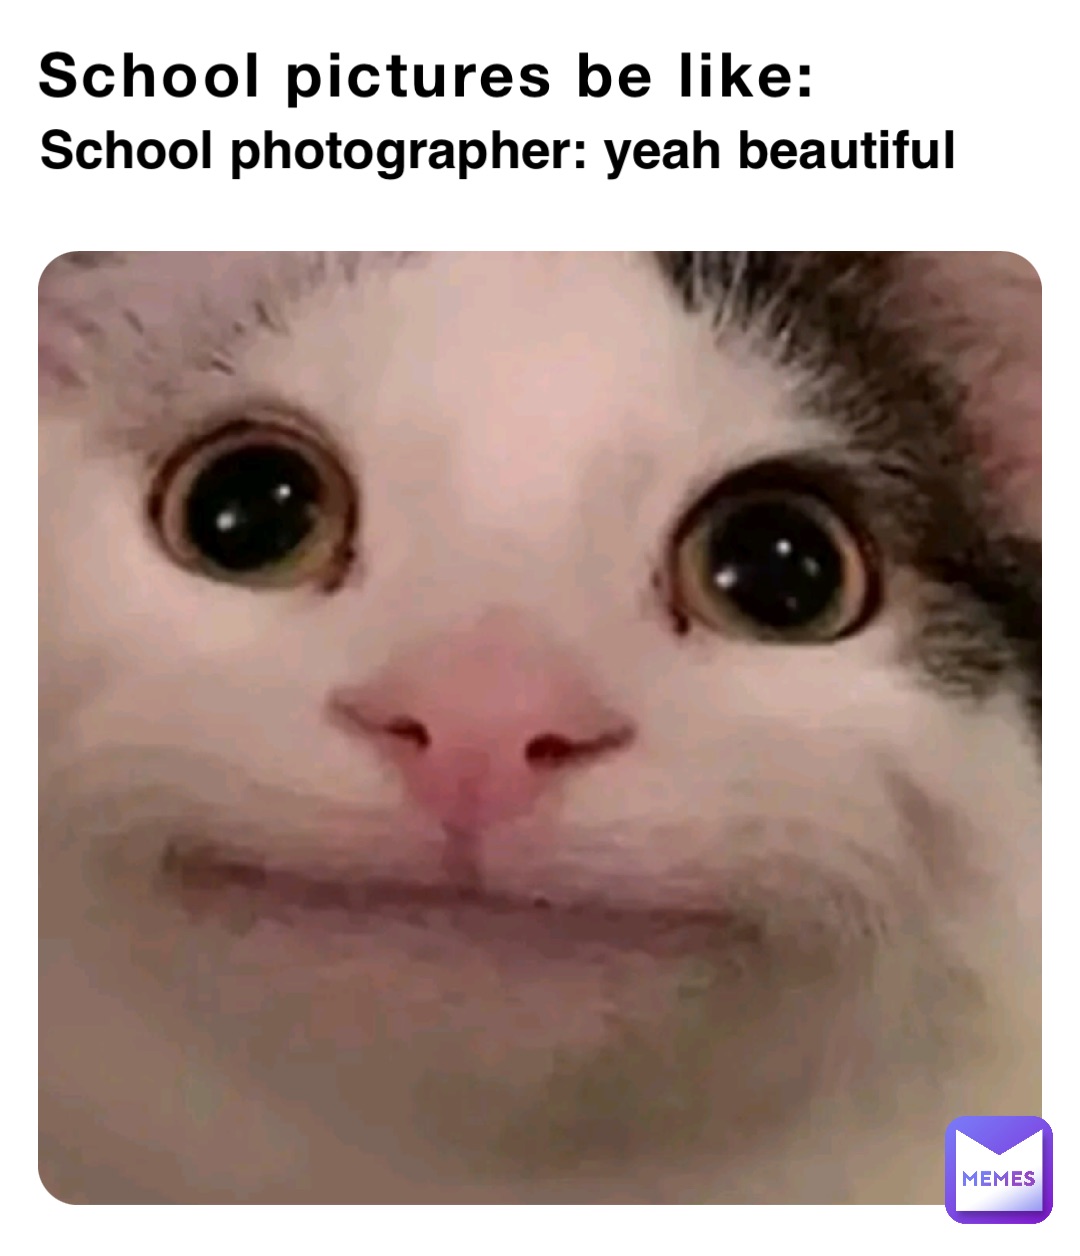 School pictures be like: School photographer: yeah beautiful